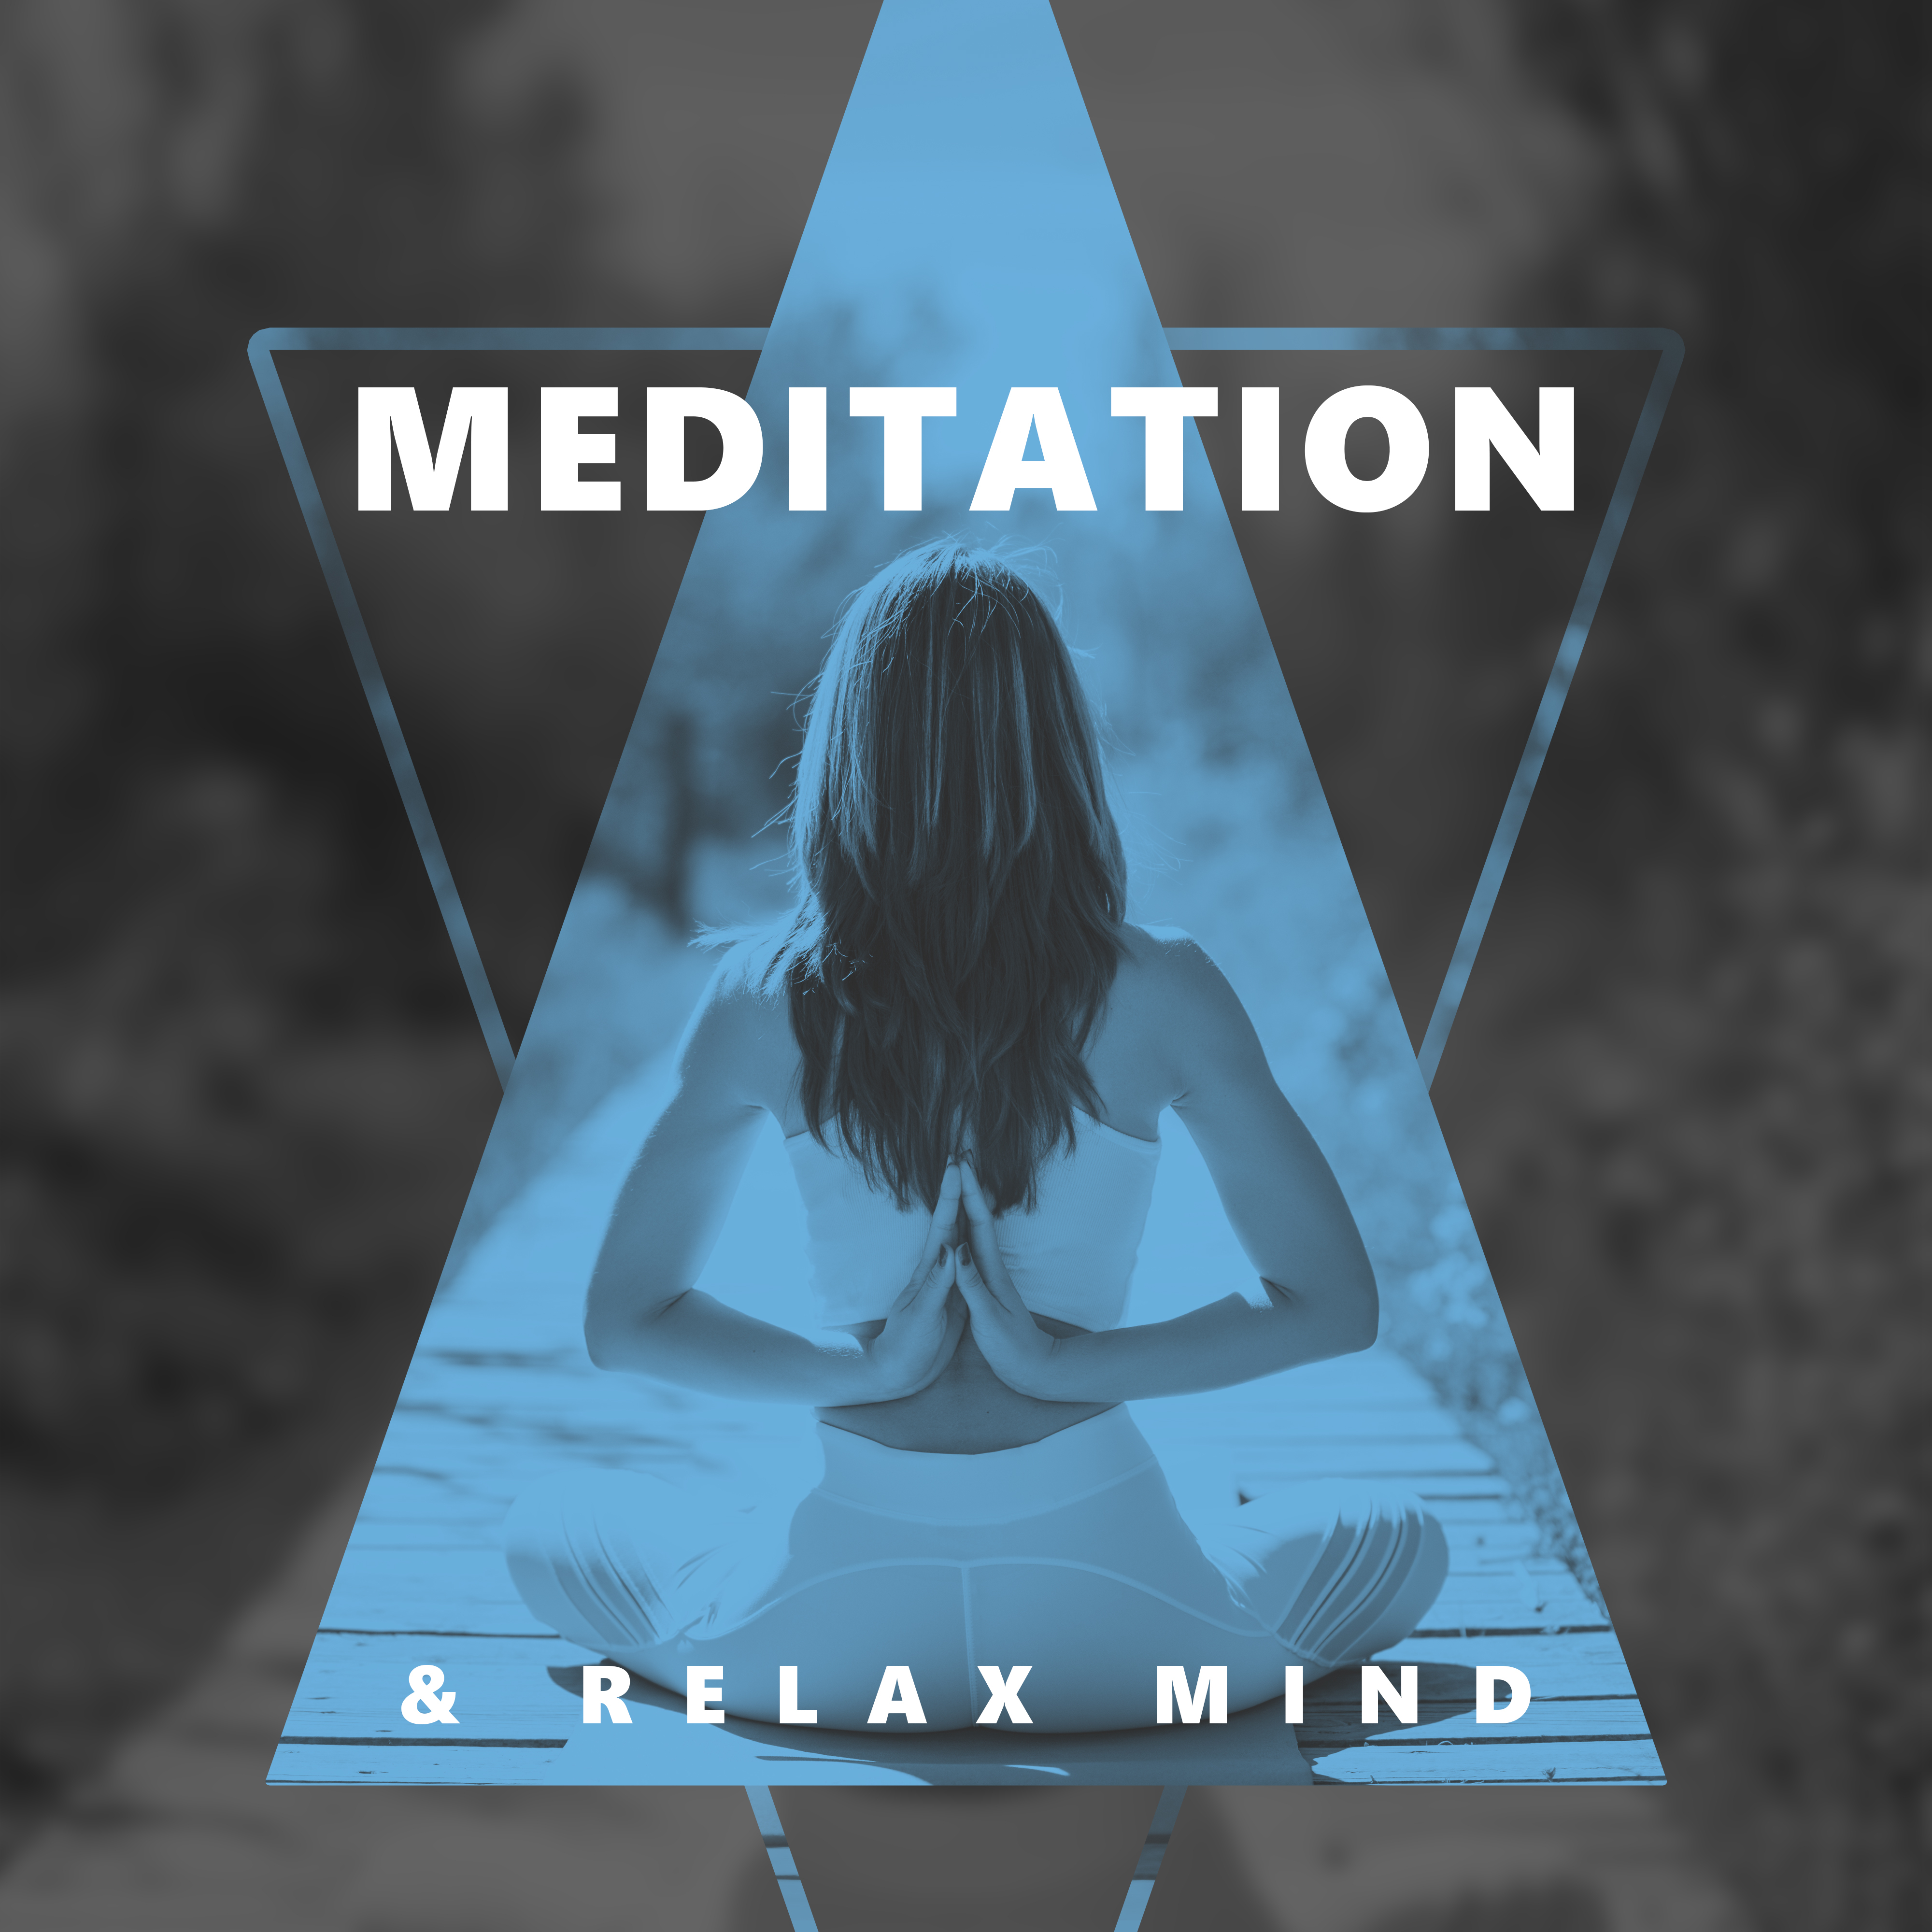 Meditation & Relax Mind